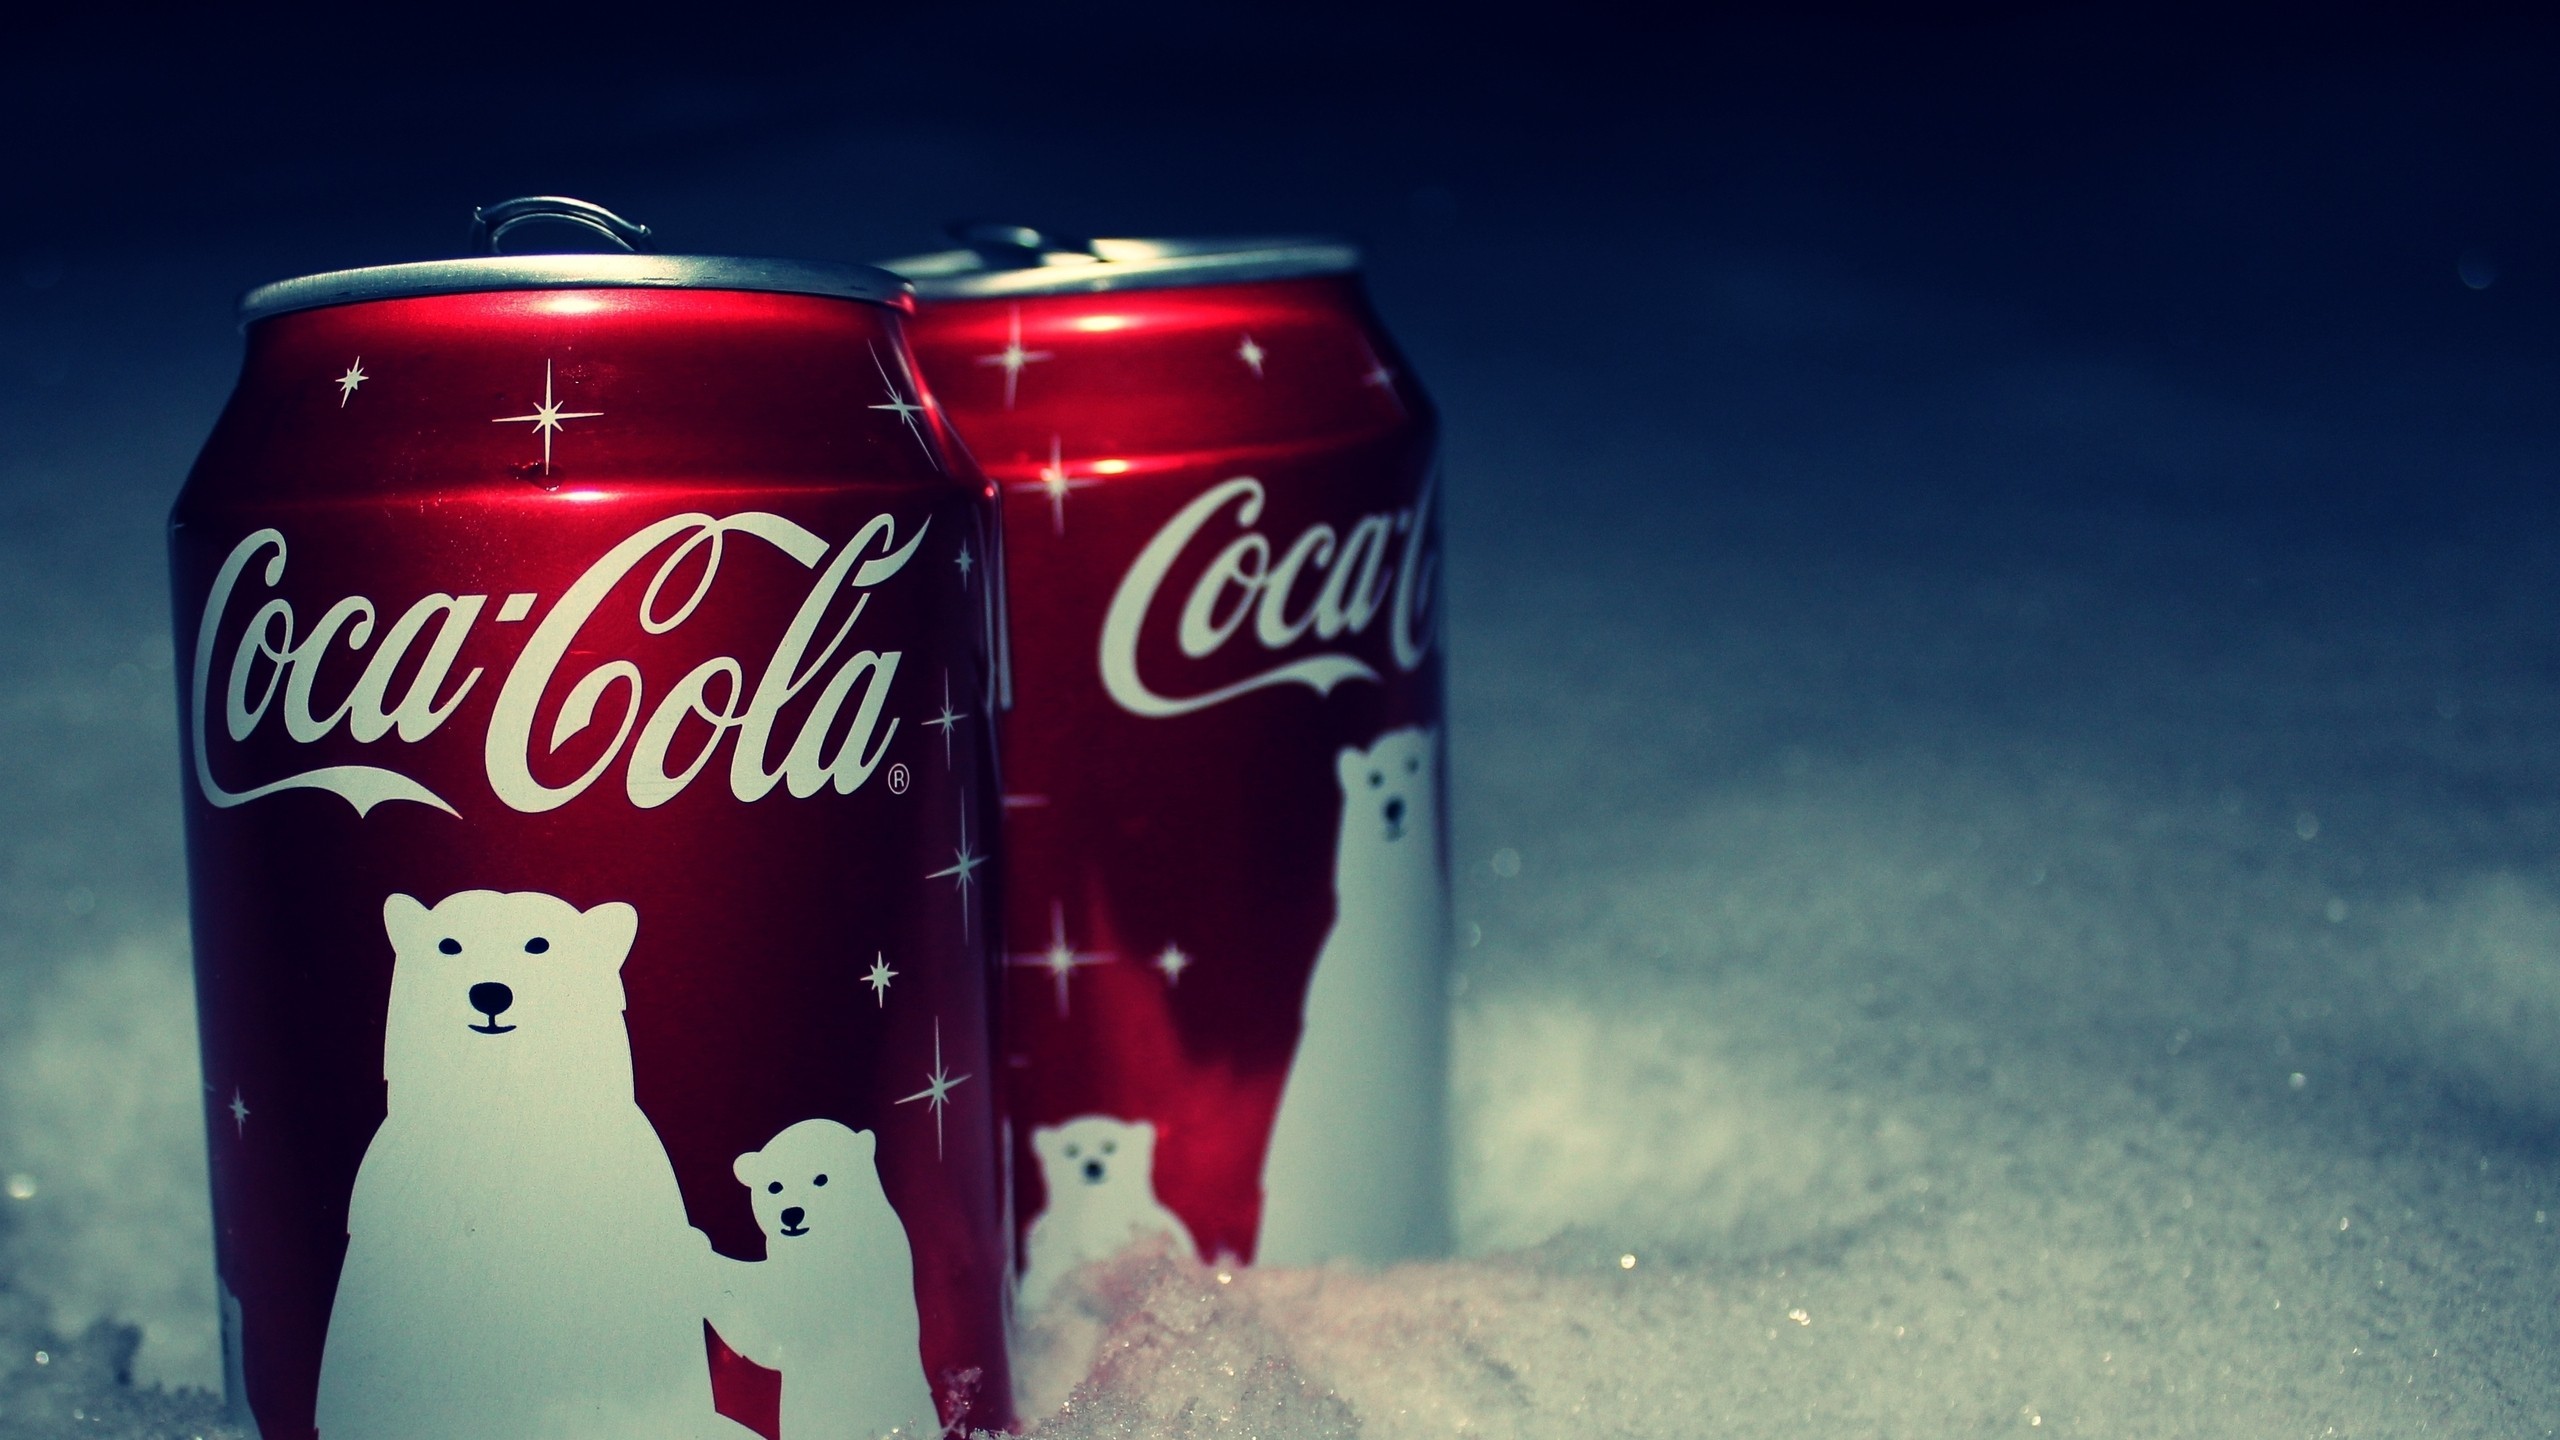 General 2560x1440 Coca-Cola can logo branch snow brand